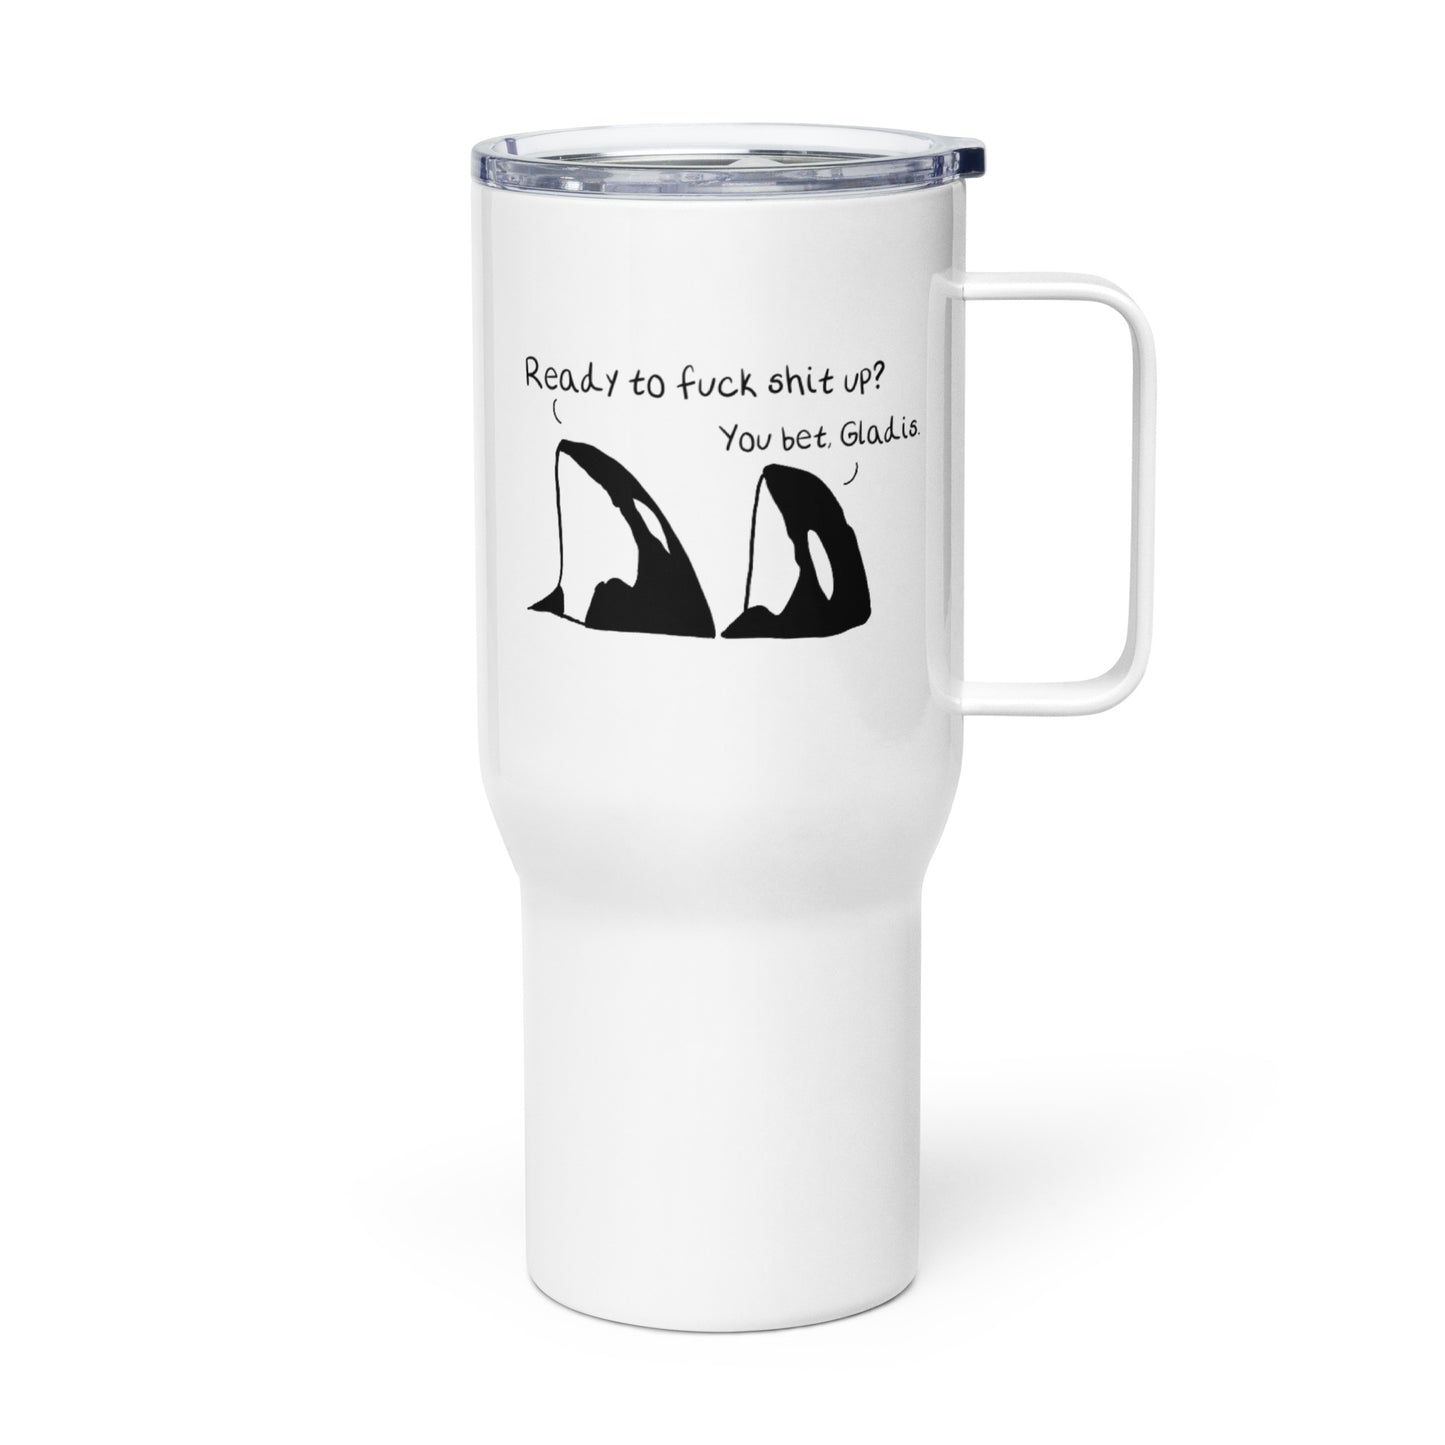 The Great Orca rampage travel mug